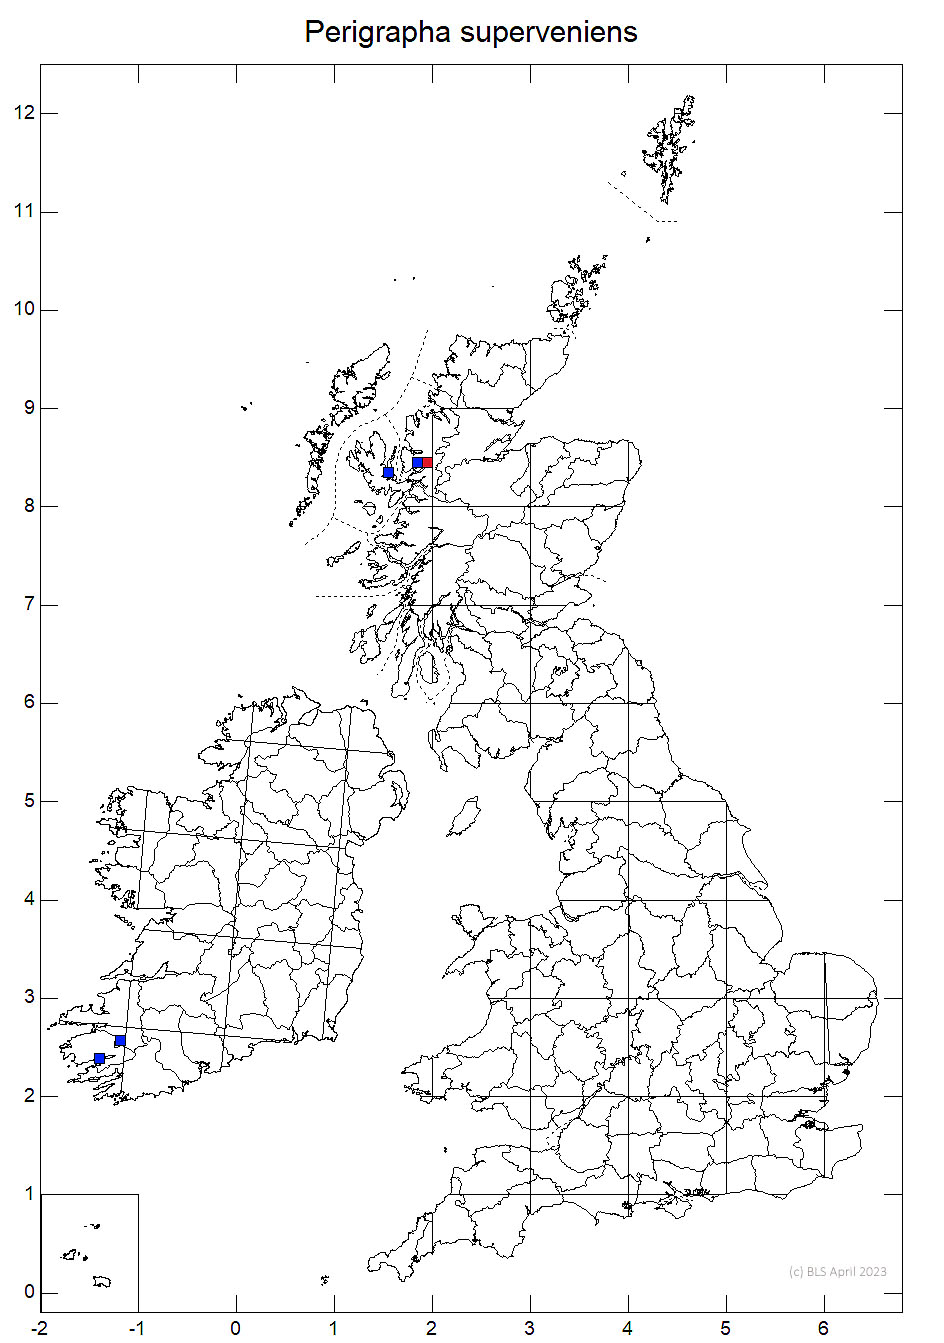 Perigrapha superveniens 10km sq distribution map